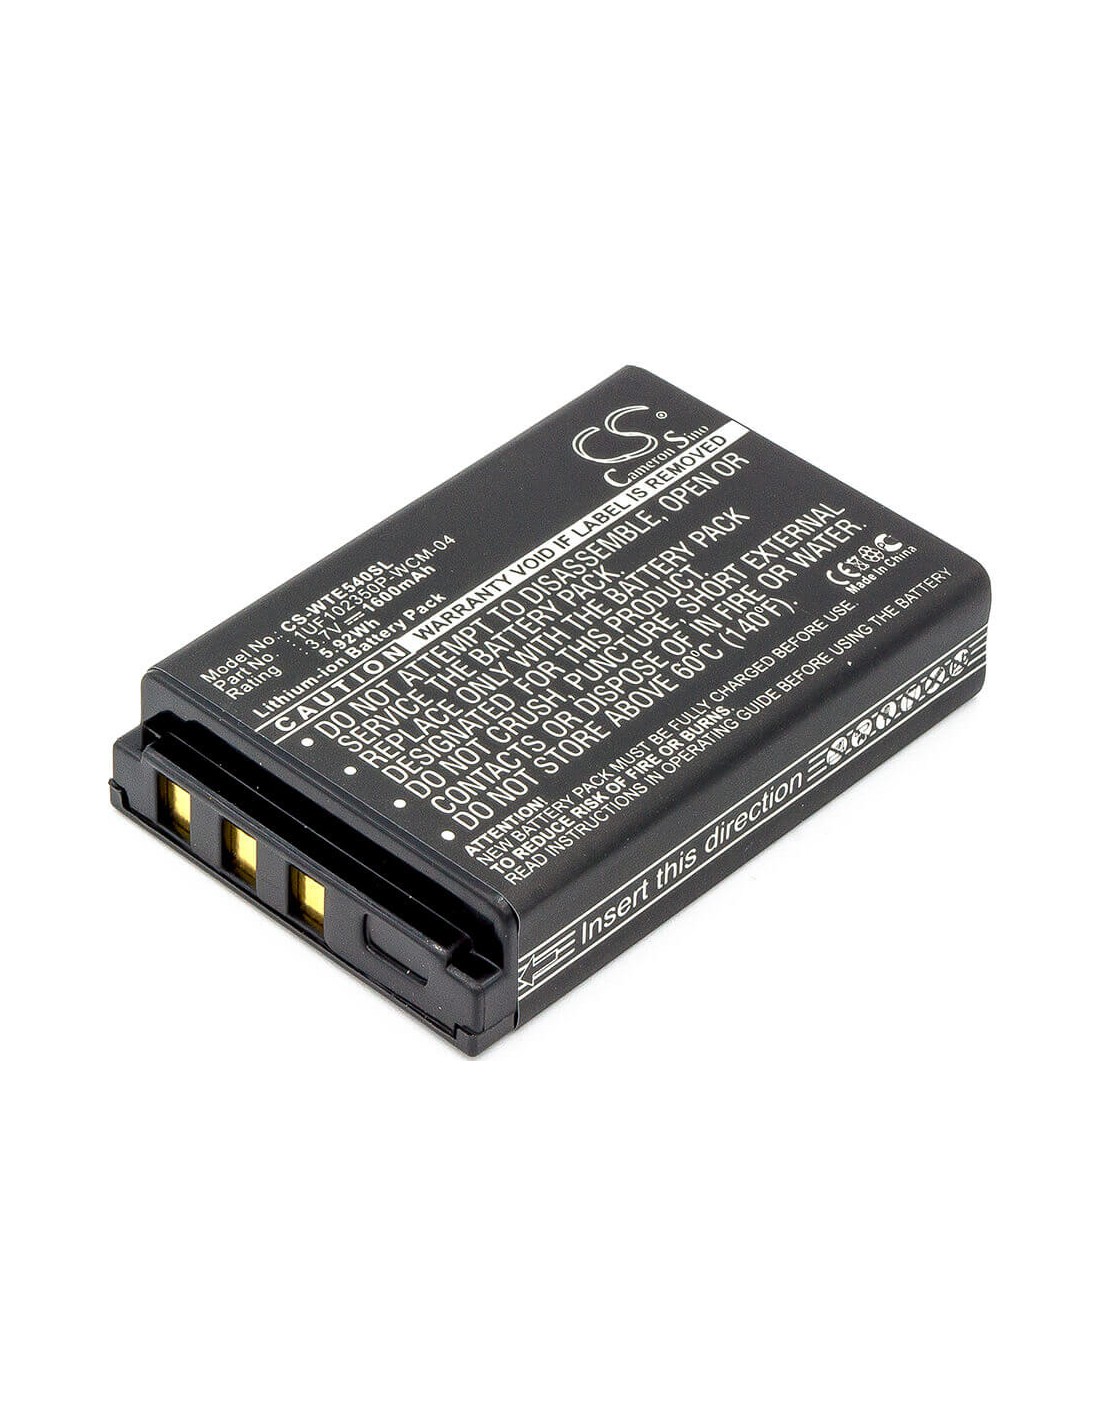 Battery for Wacom Intuos4 Wireless, Ptk-540wl, Ptk-540wl-en 3.7V, 1600mAh - 5.92Wh